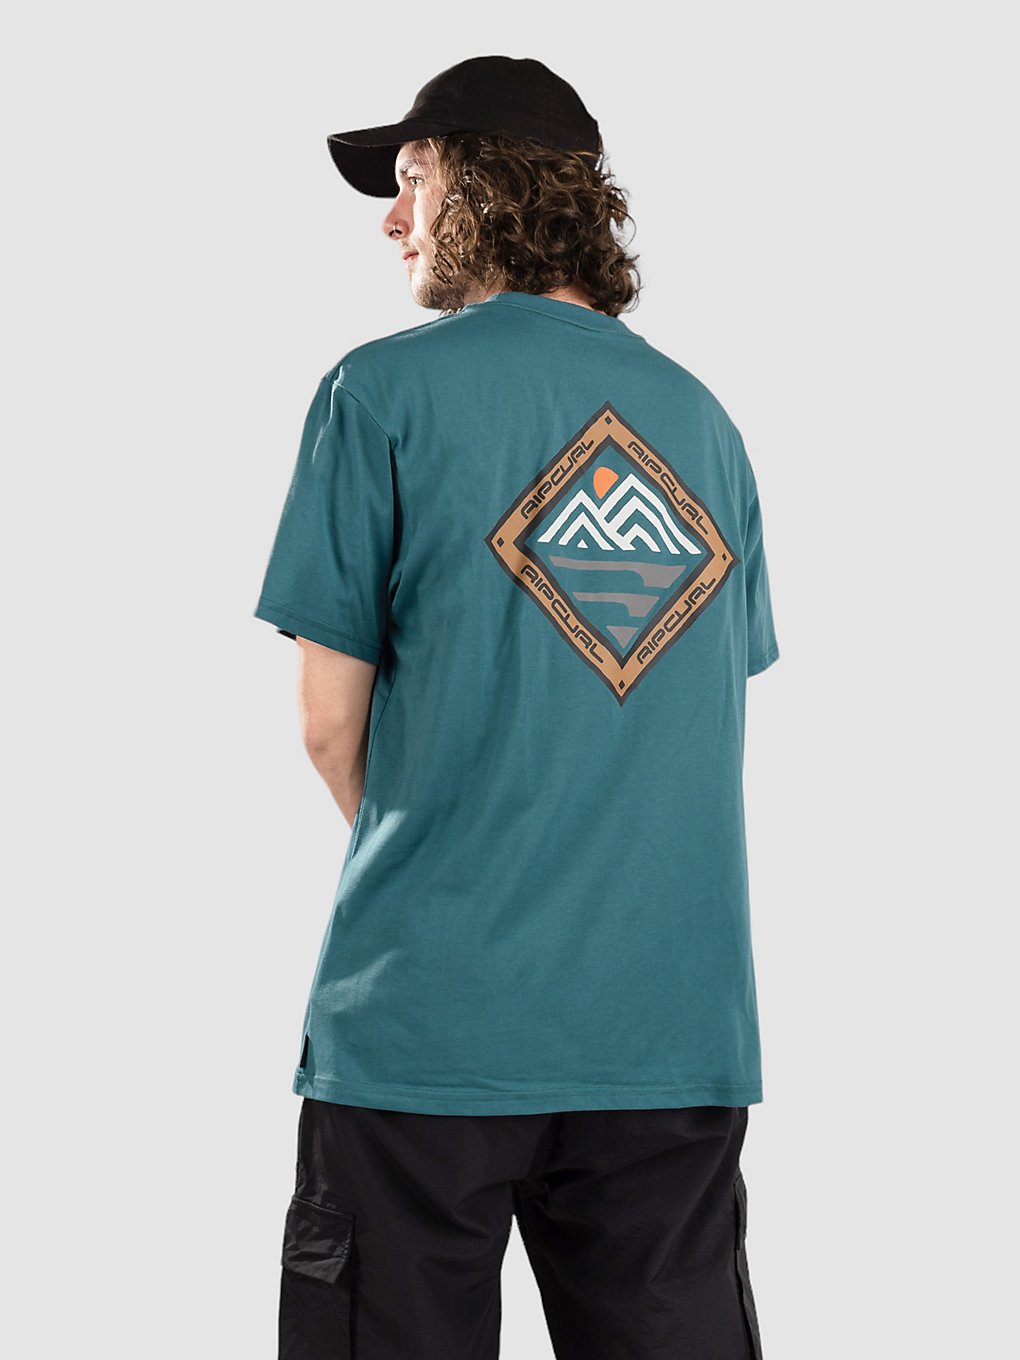 Rip Curl Vaporcool Journeys Peak T-Shirt blue green kaufen